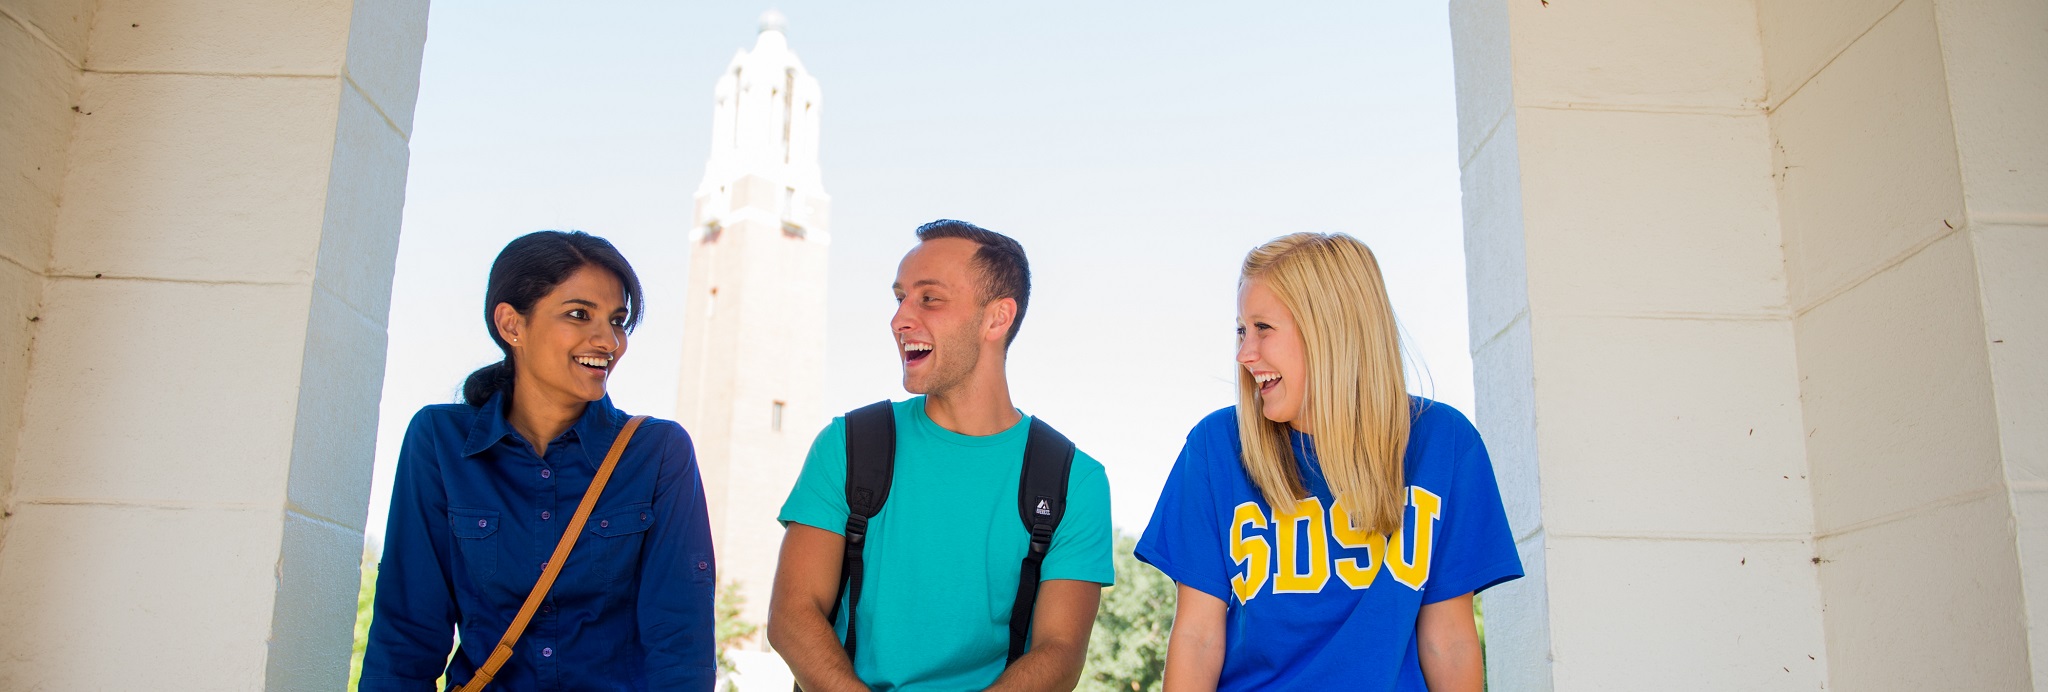 SDSU students on campus.